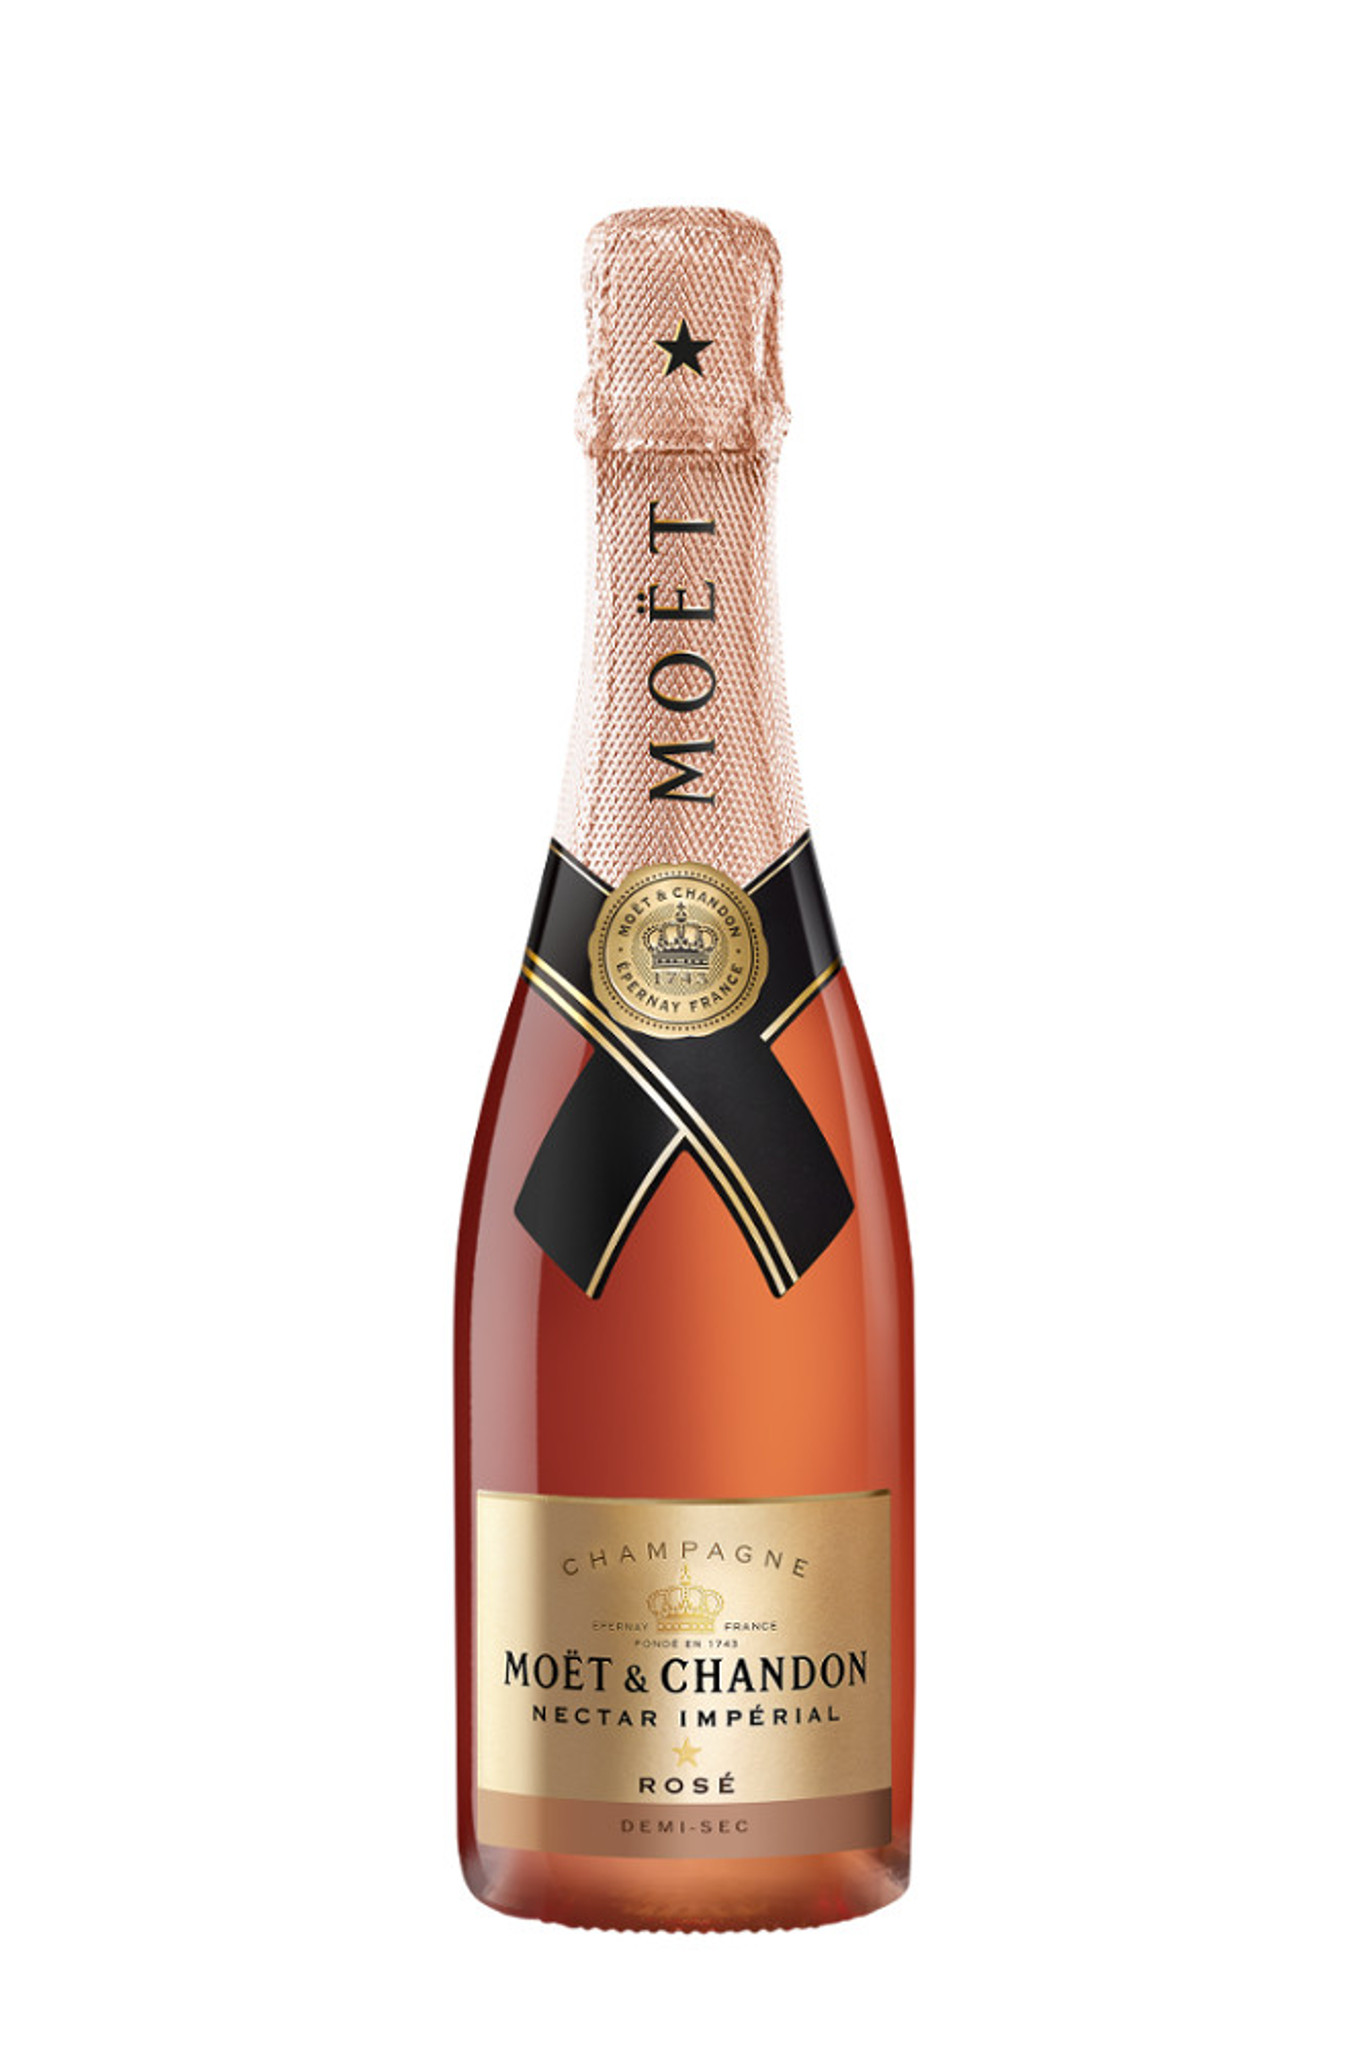 & - Bottle) Imperial Nectar Moet (375ml Champagne Rose Half Premier Chandon